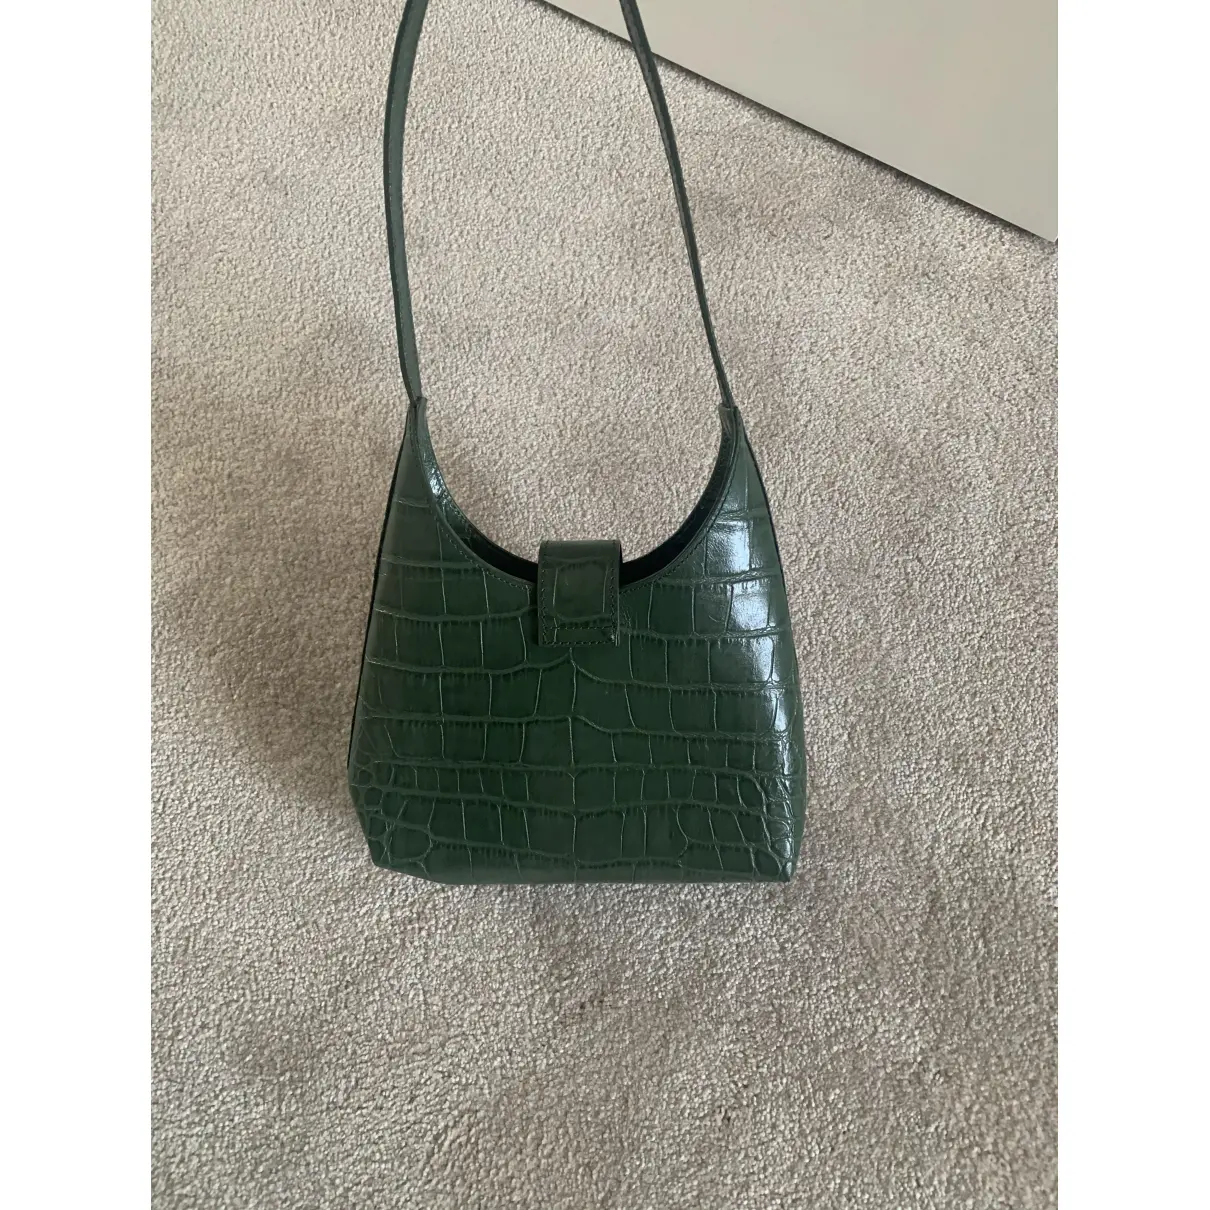 Buy Imago-a Leather handbag online